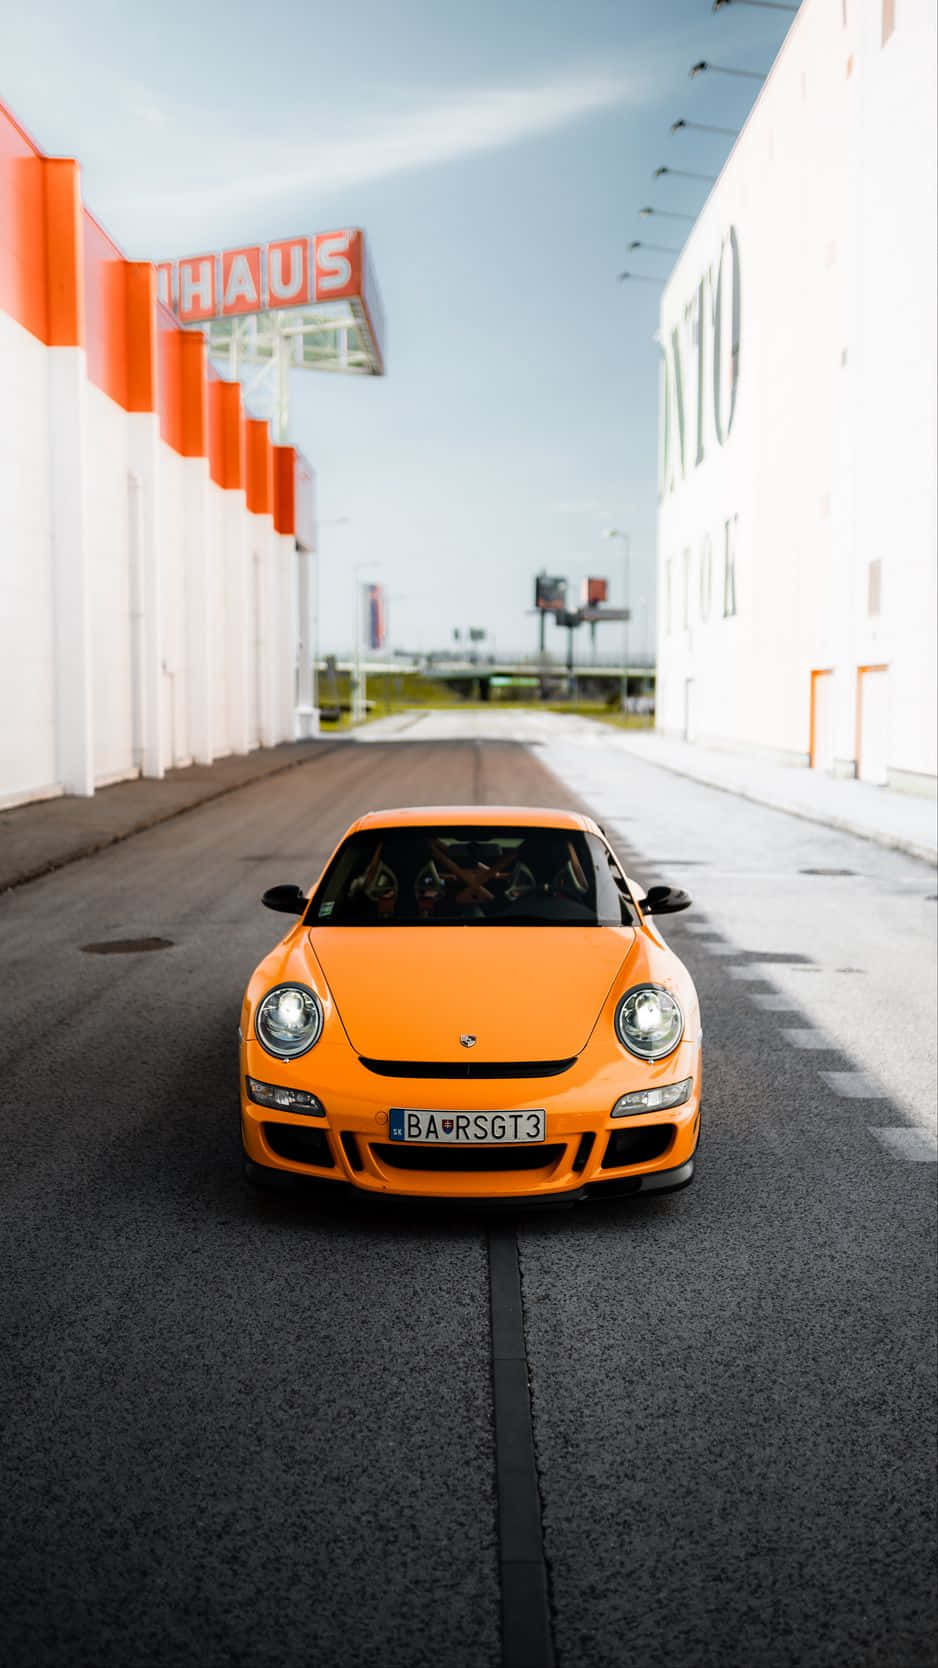 Feel the Speed with Porsche iPhone Wallpaper Wallpaper